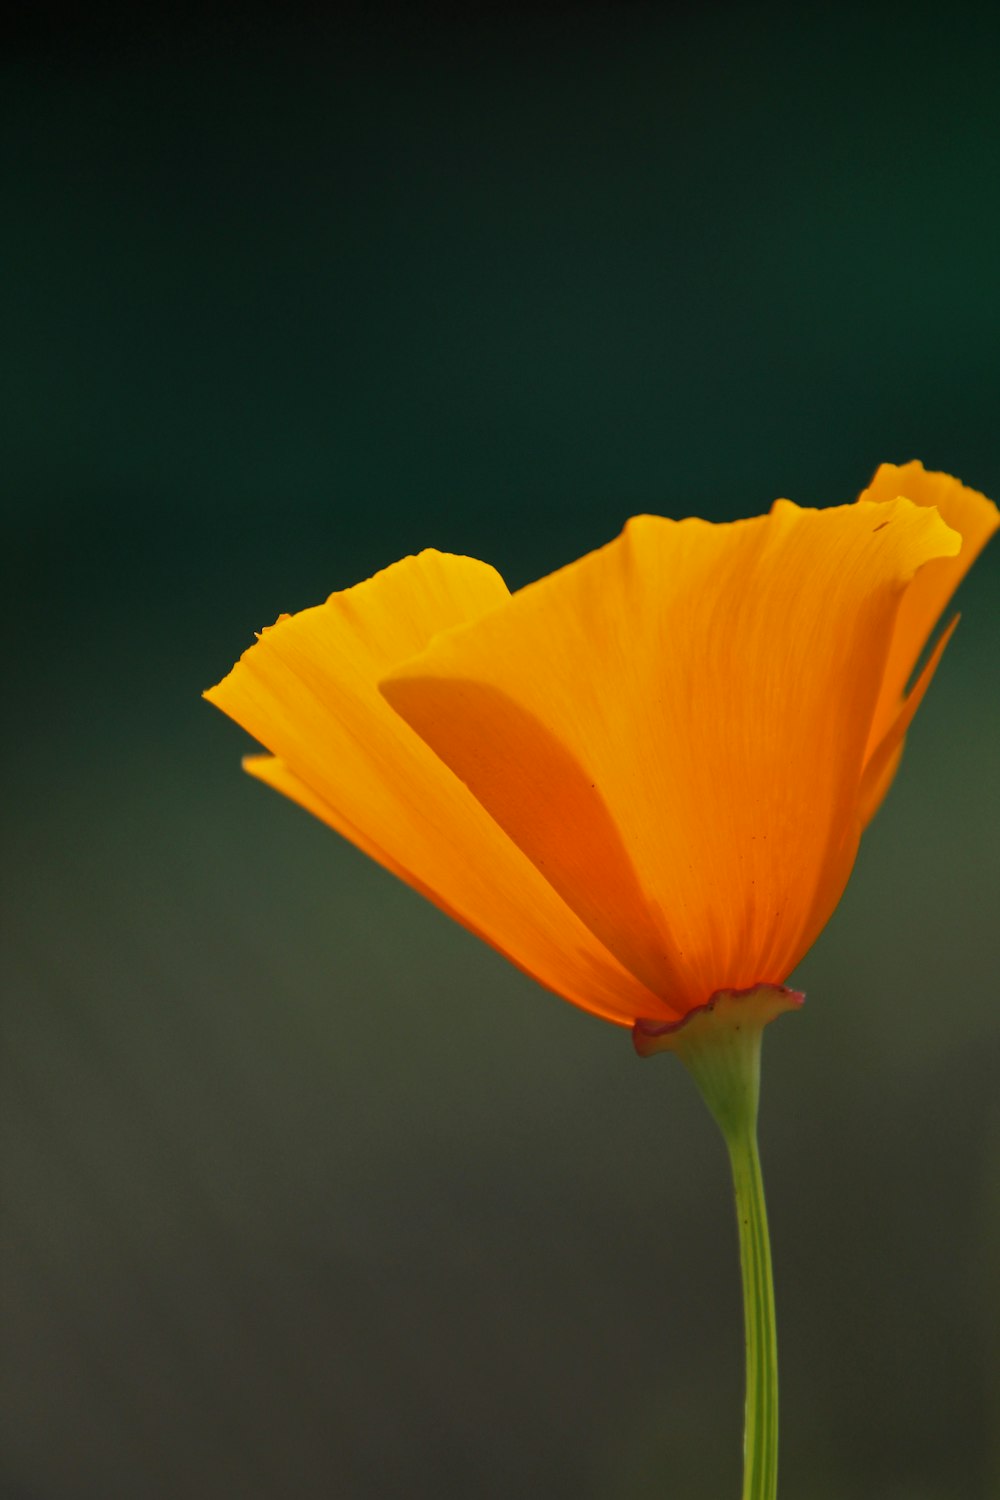 a single orange flower with a green stem